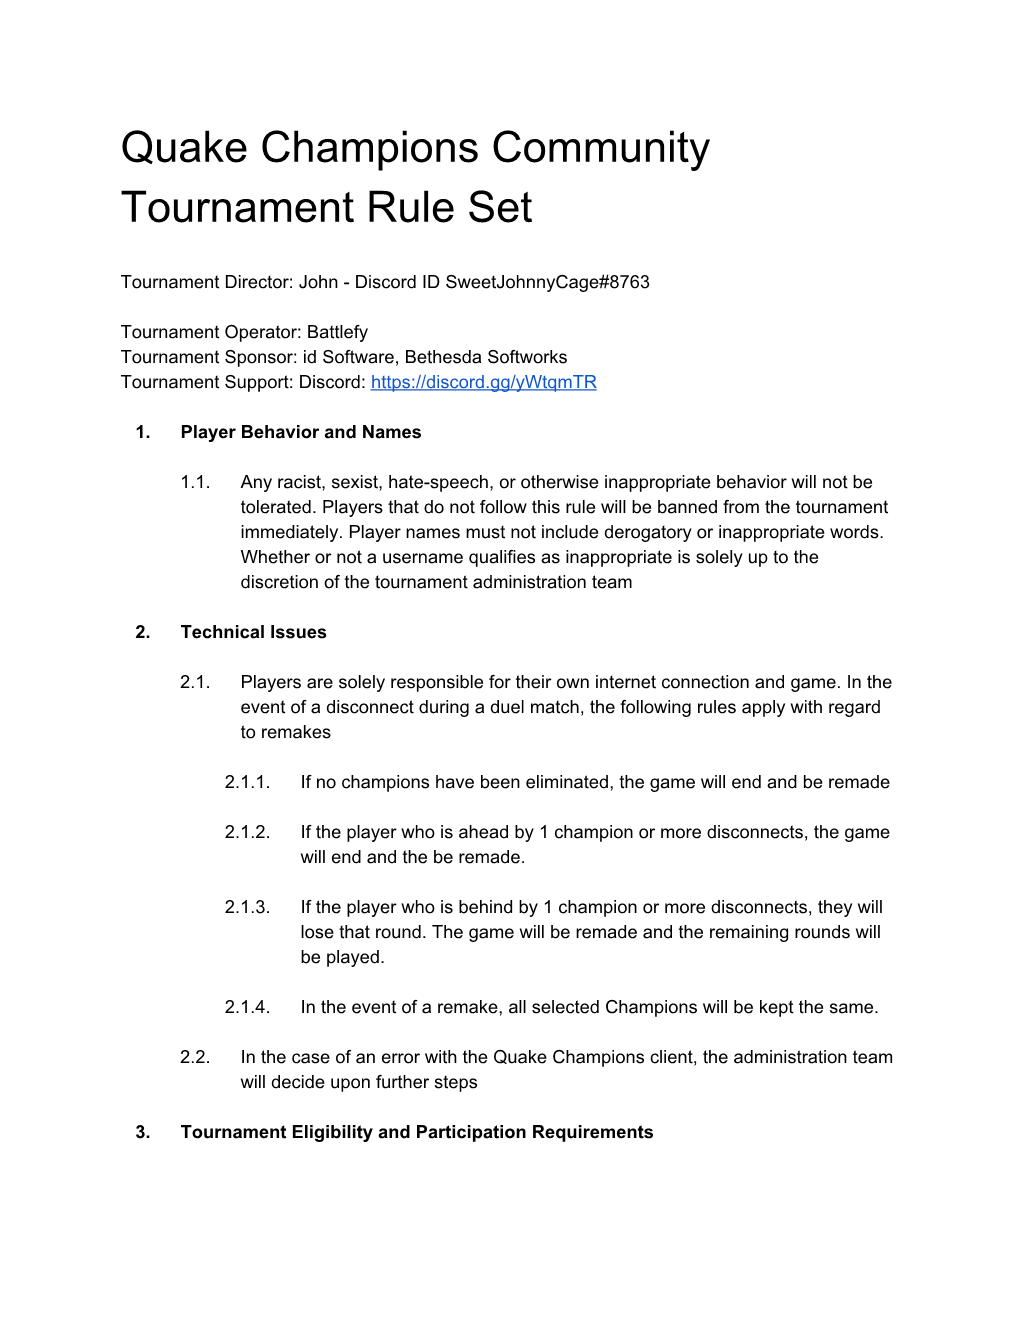 Quake Champions Community Tournament Rule Set